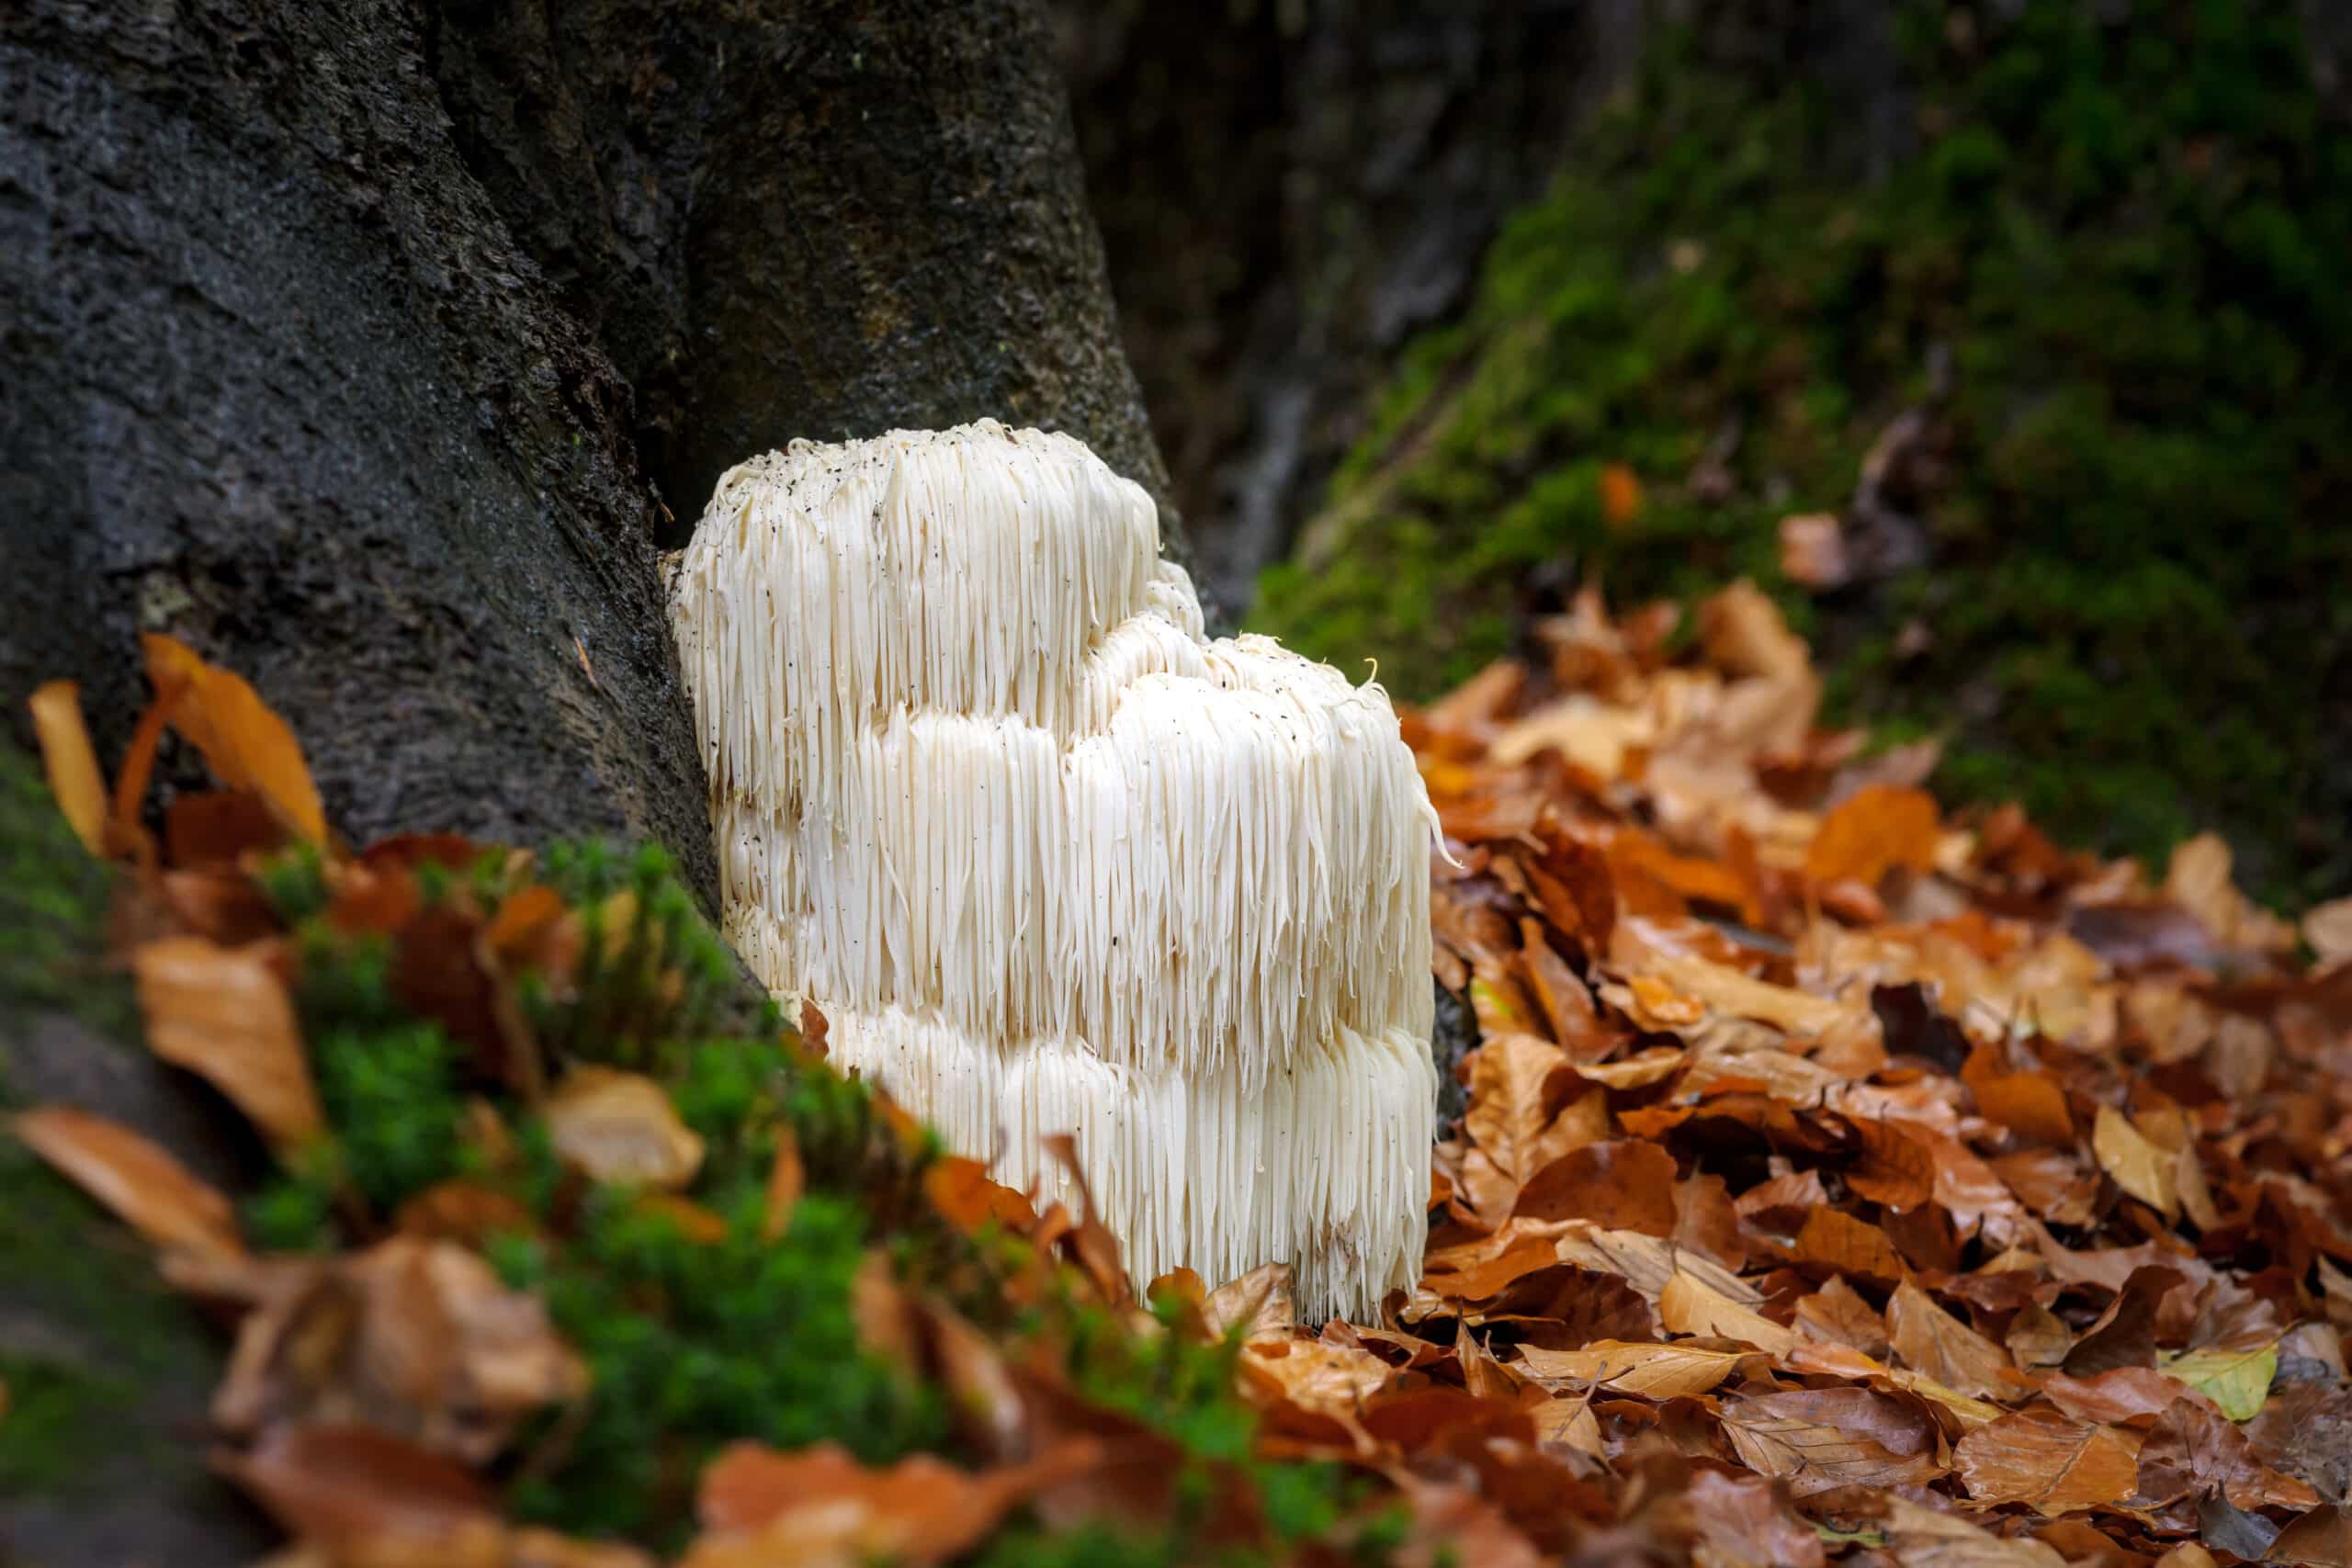 Real Mushrooms Lions Mane In Nature